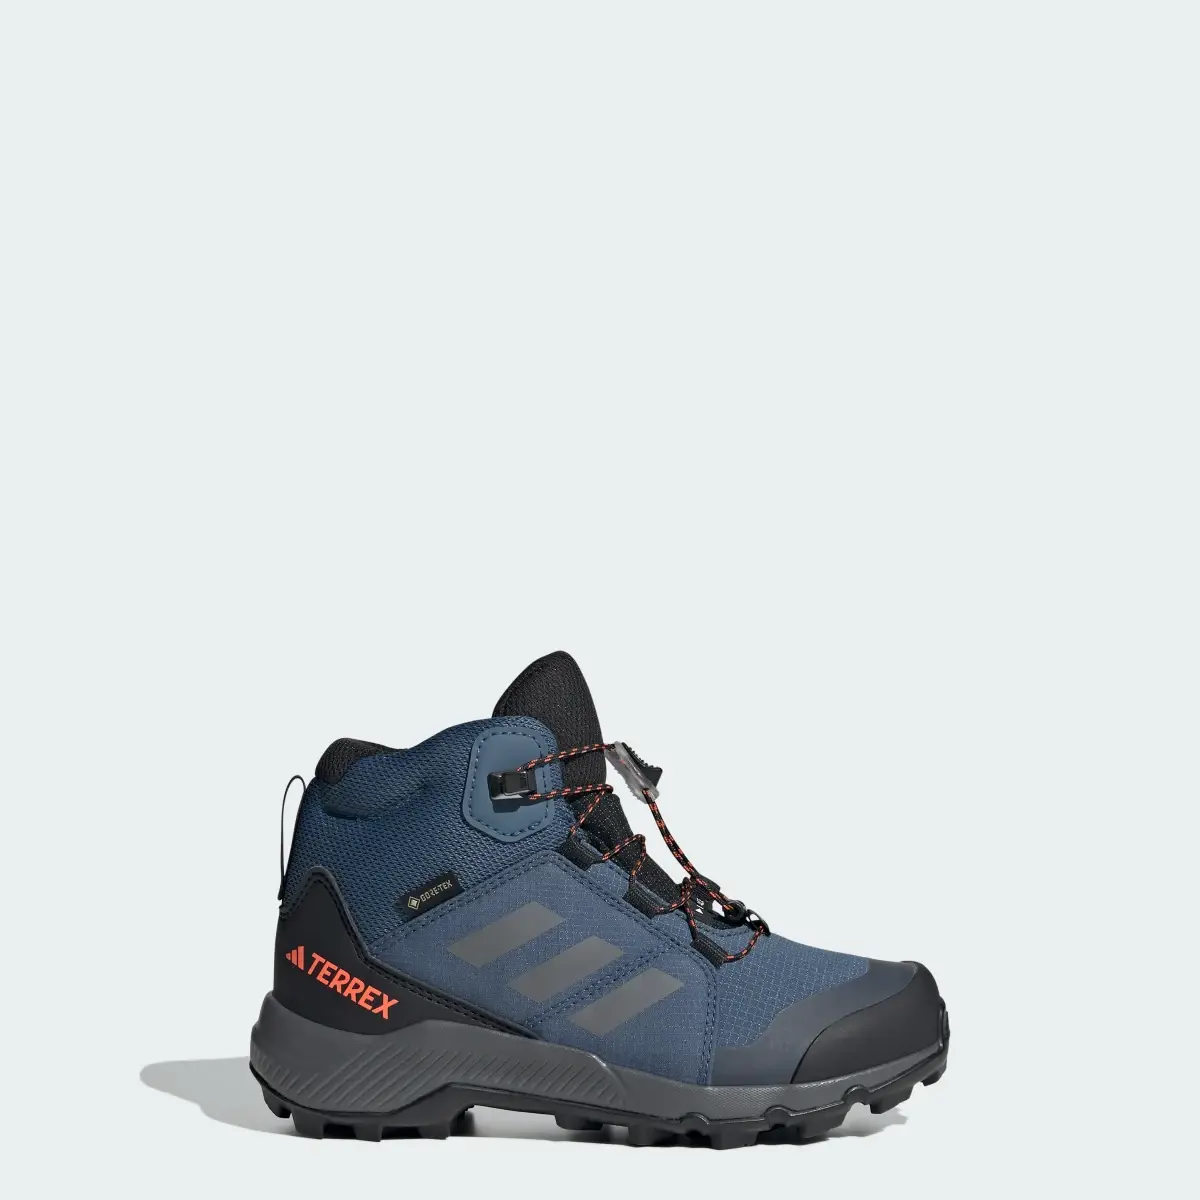 Adidas Terrex Mid GORE-TEX Hiking Shoes. 1